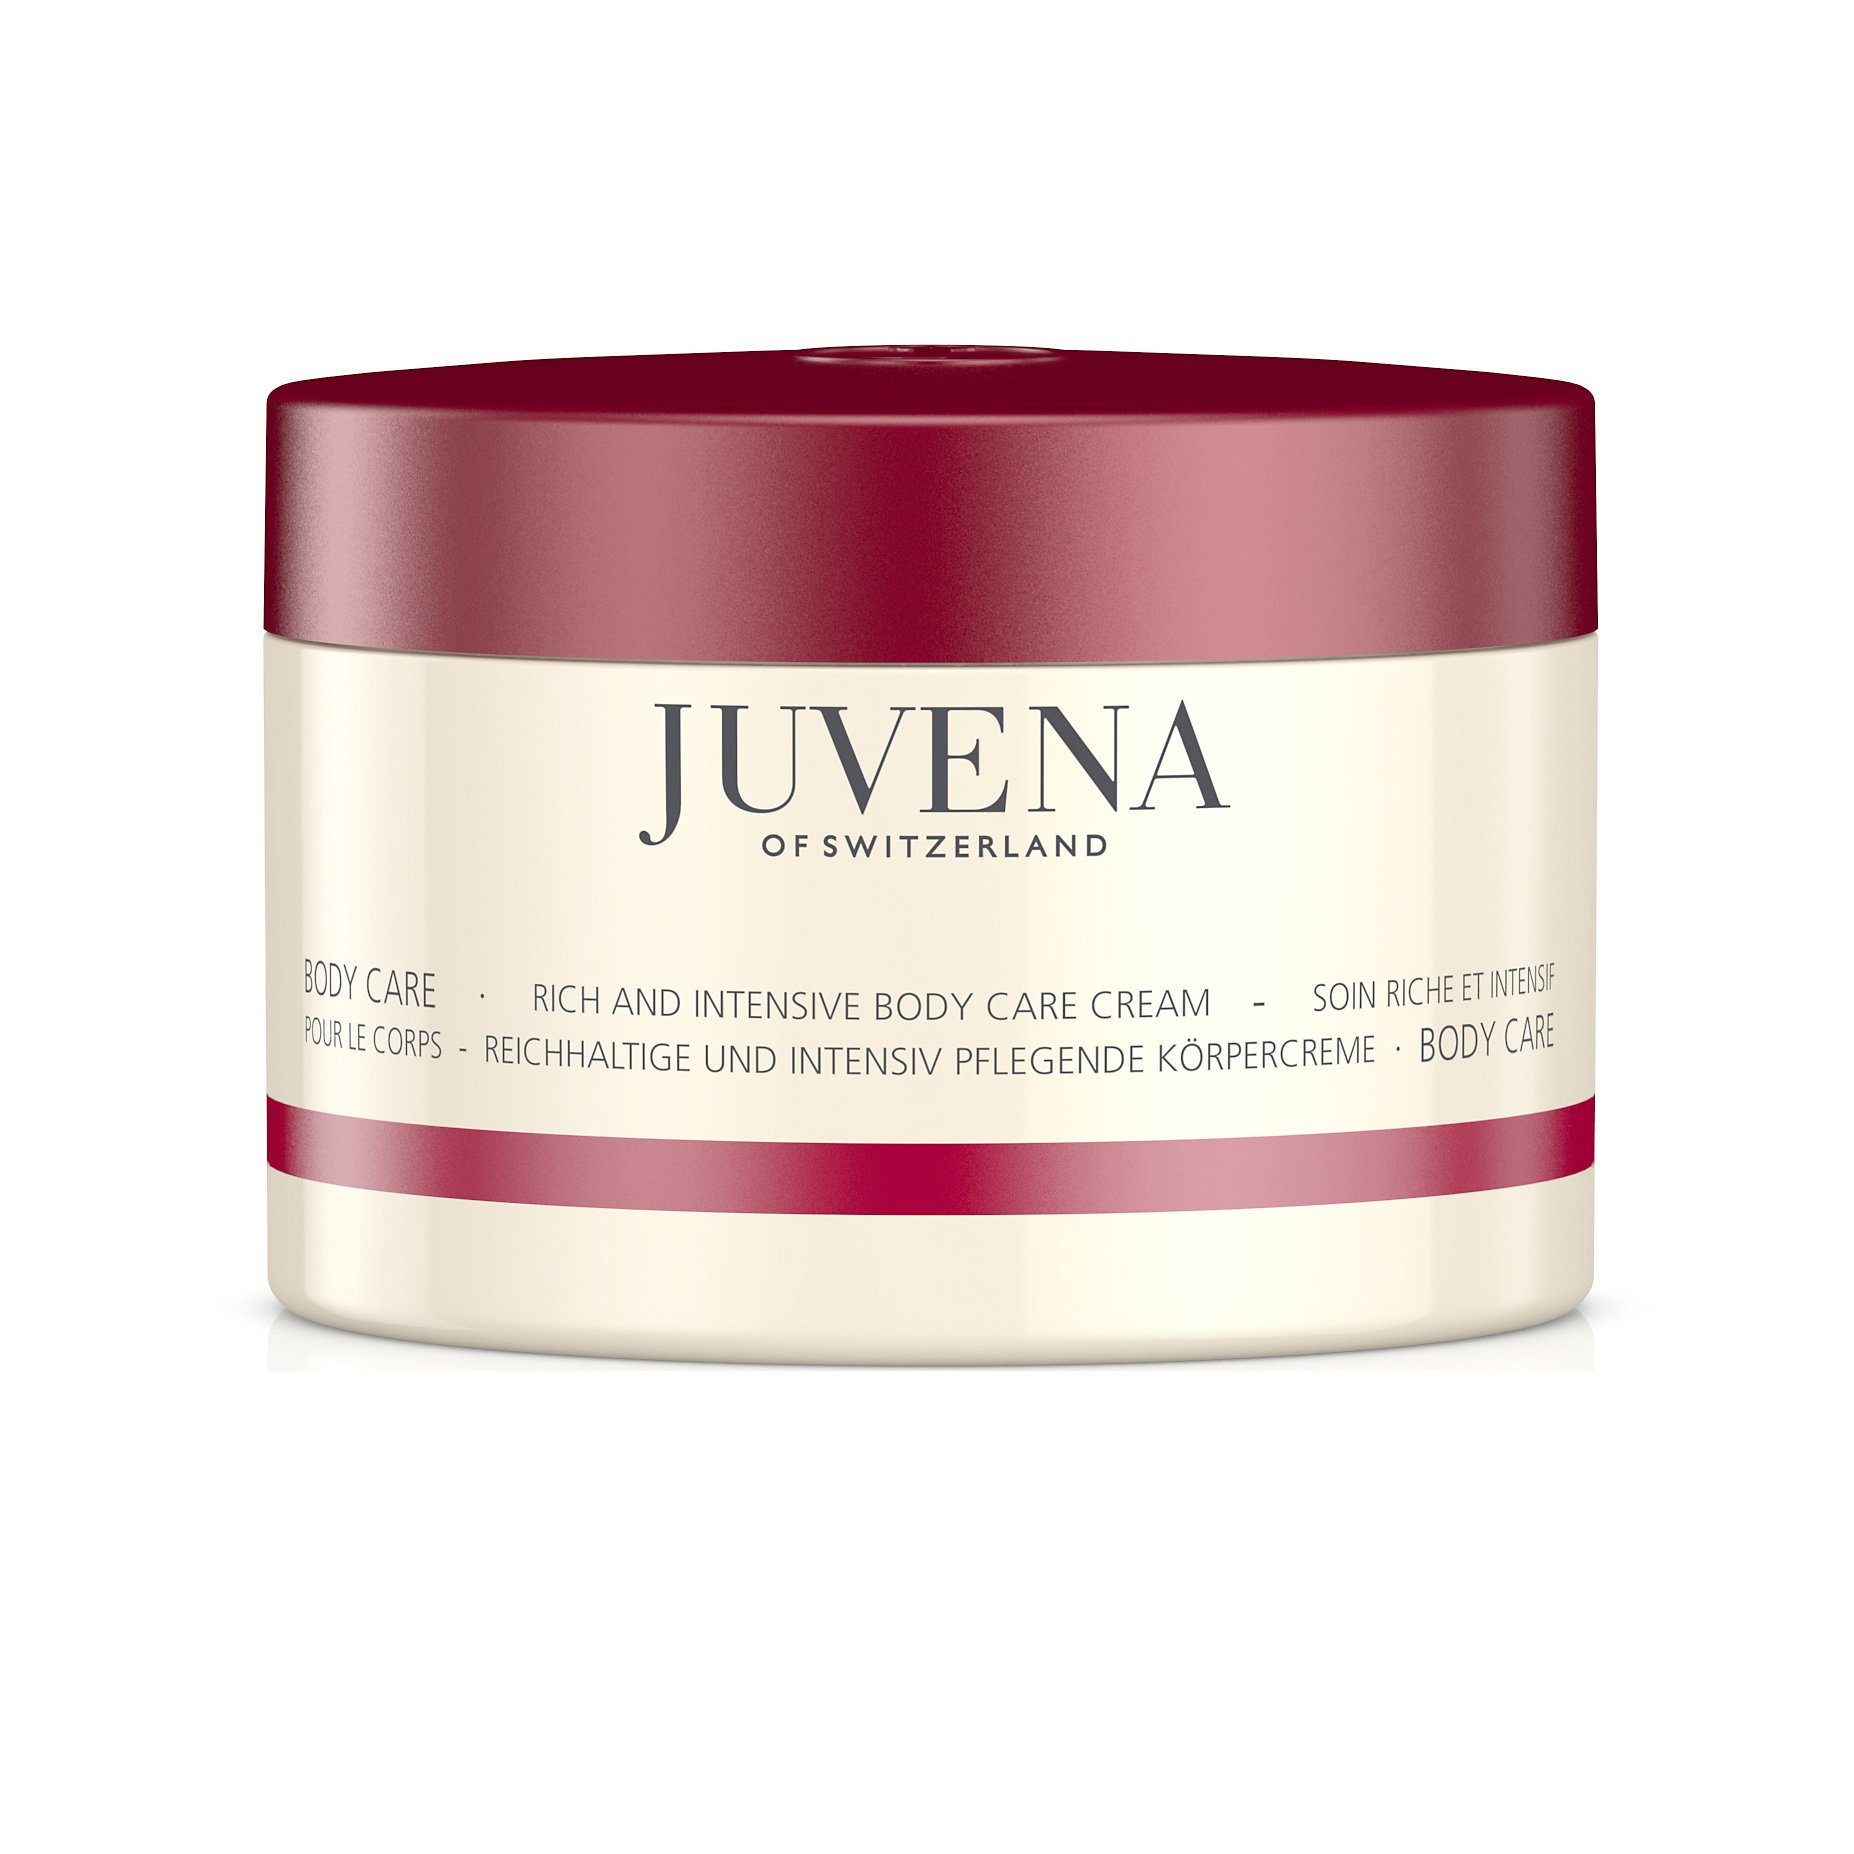 Juvena Body Care Rich & Intensive Body Care Cream Περιποιητική, Θρεπτική Κρέμα Σώματος που Εκπέμπει Αύρα Ευεξίας 200ml